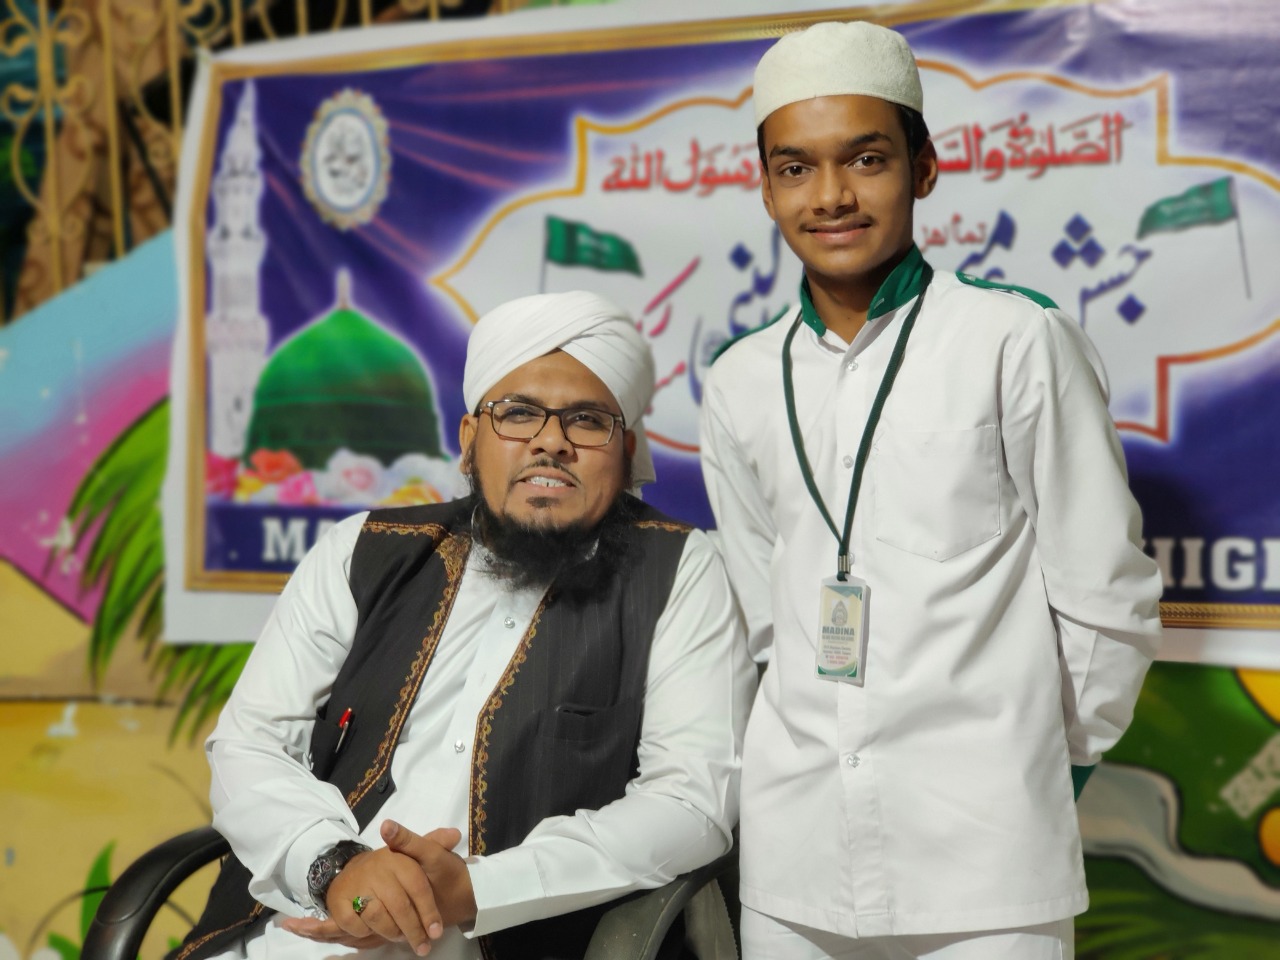 Jashn e Eid milad un nabi Celebration